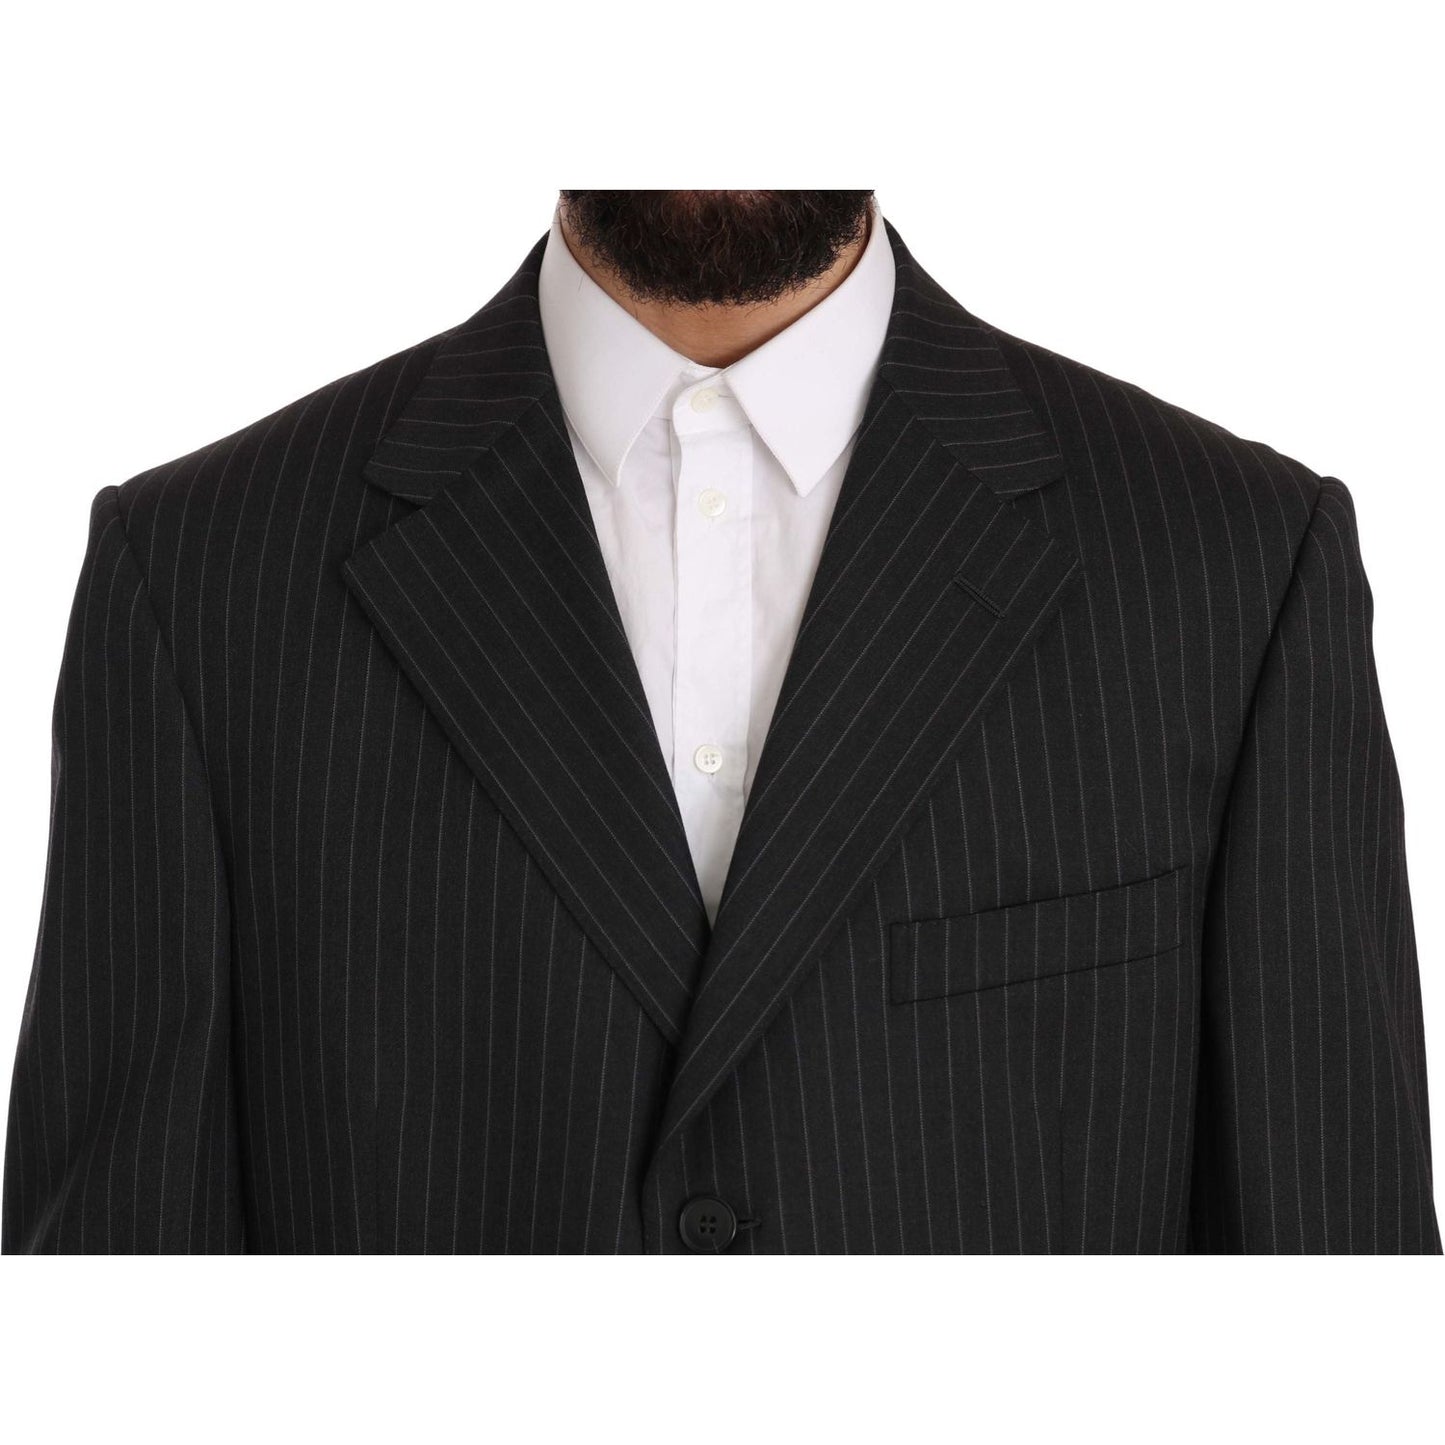 Z ZEGNA Elegant Black Striped Wool Suit Suit black-striped-two-piece-3-button-100-wool-suit IMG_7799-scaled.jpg